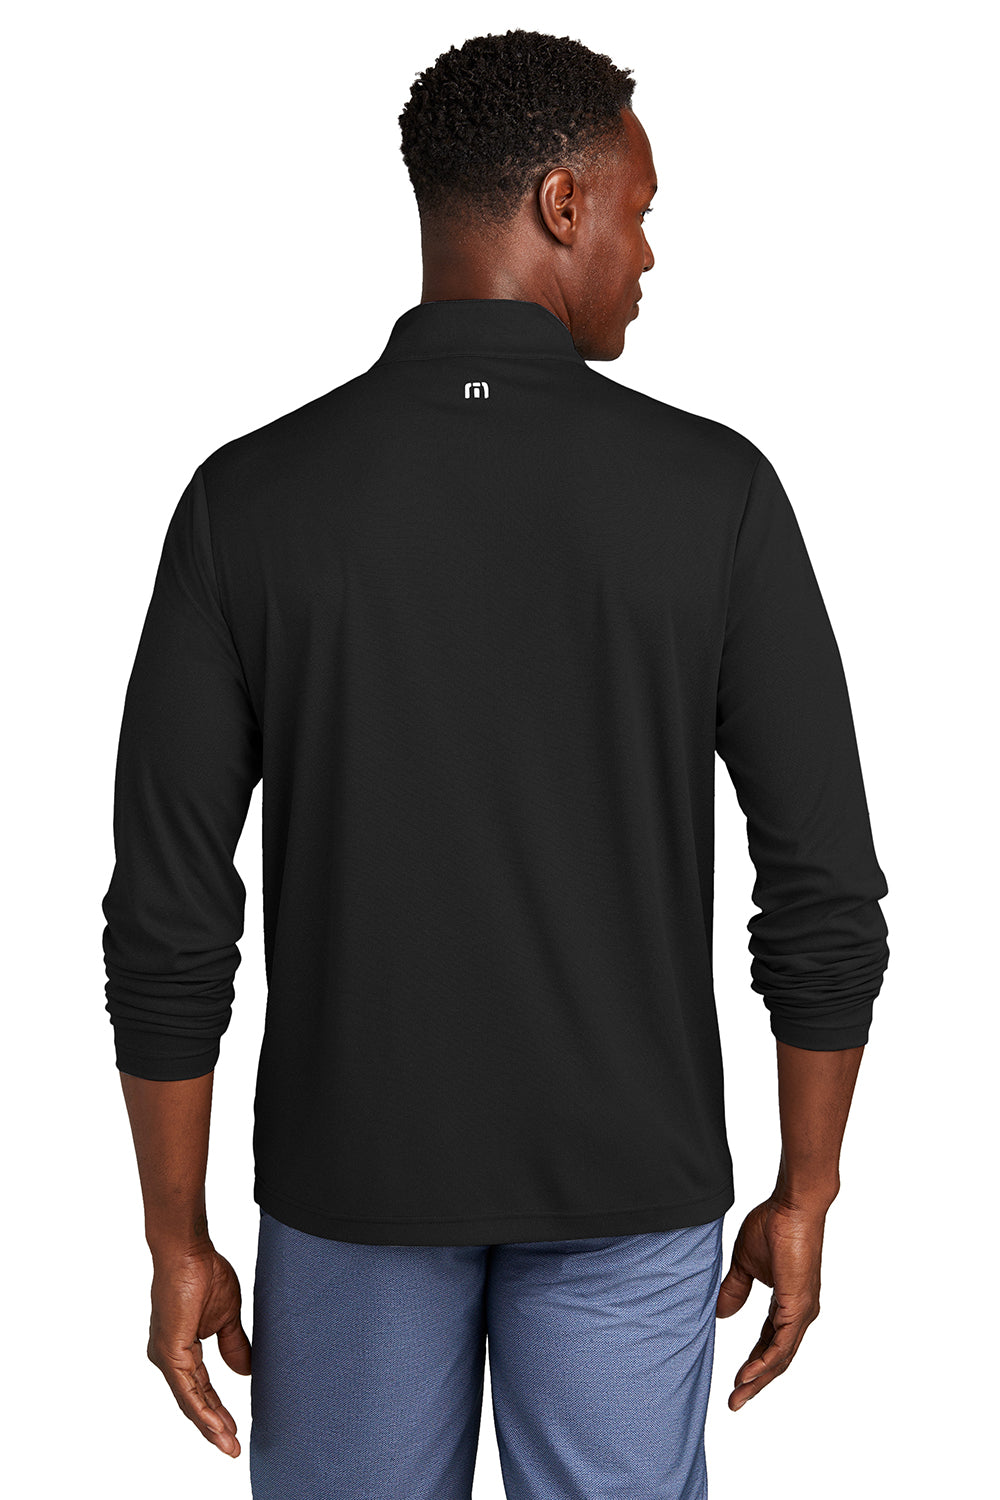 TravisMathew TM1MY397 Mens Coto Performance Wrinkle Resistant 1/4 Zip Sweatshirt Black Model Back